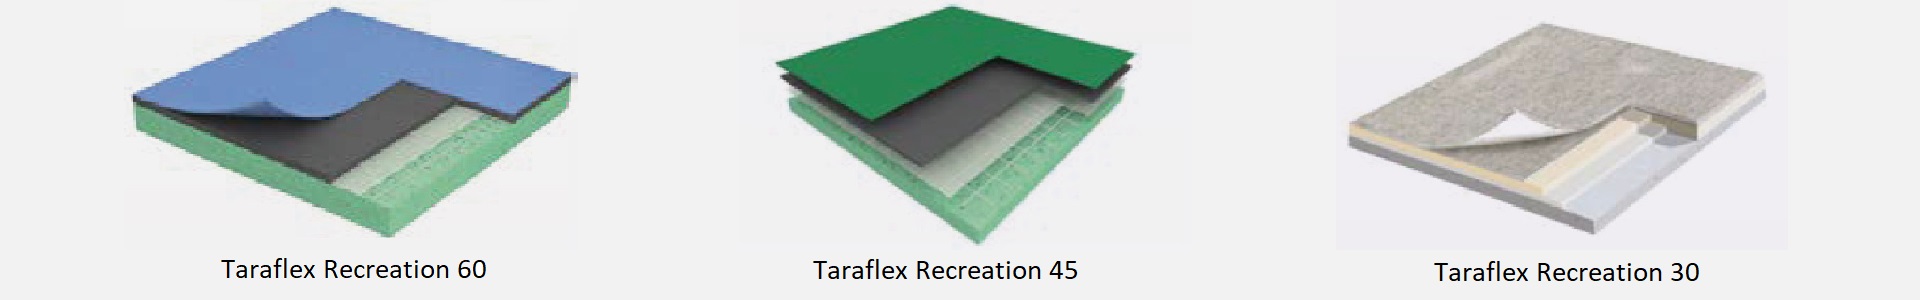 sportove podlahy taraflex recreation